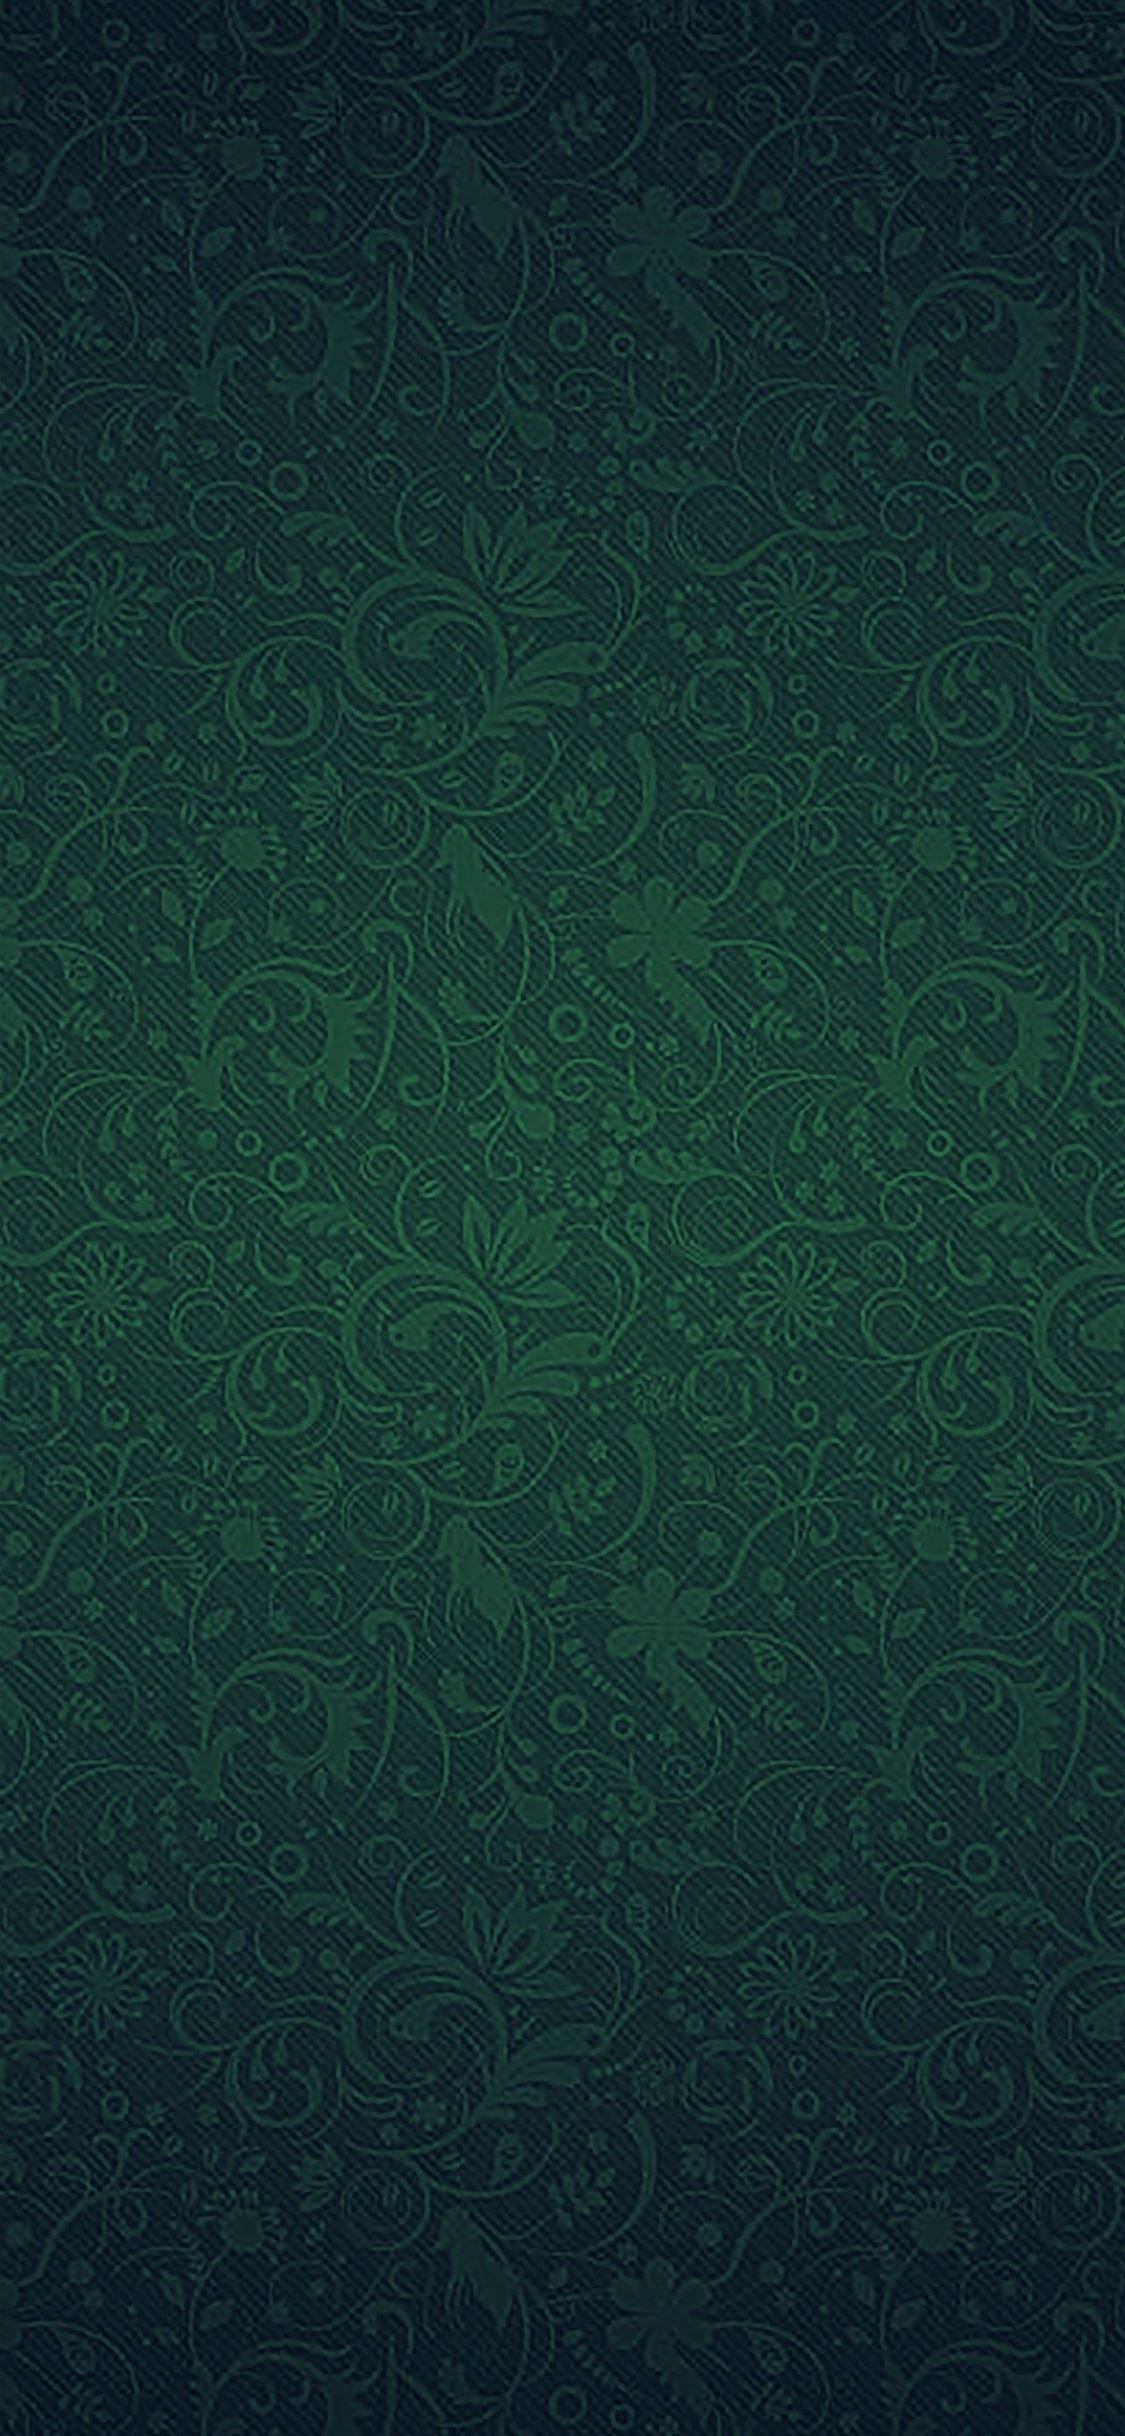 Green Ornaments Texture Pattern iPhone wallpaper 